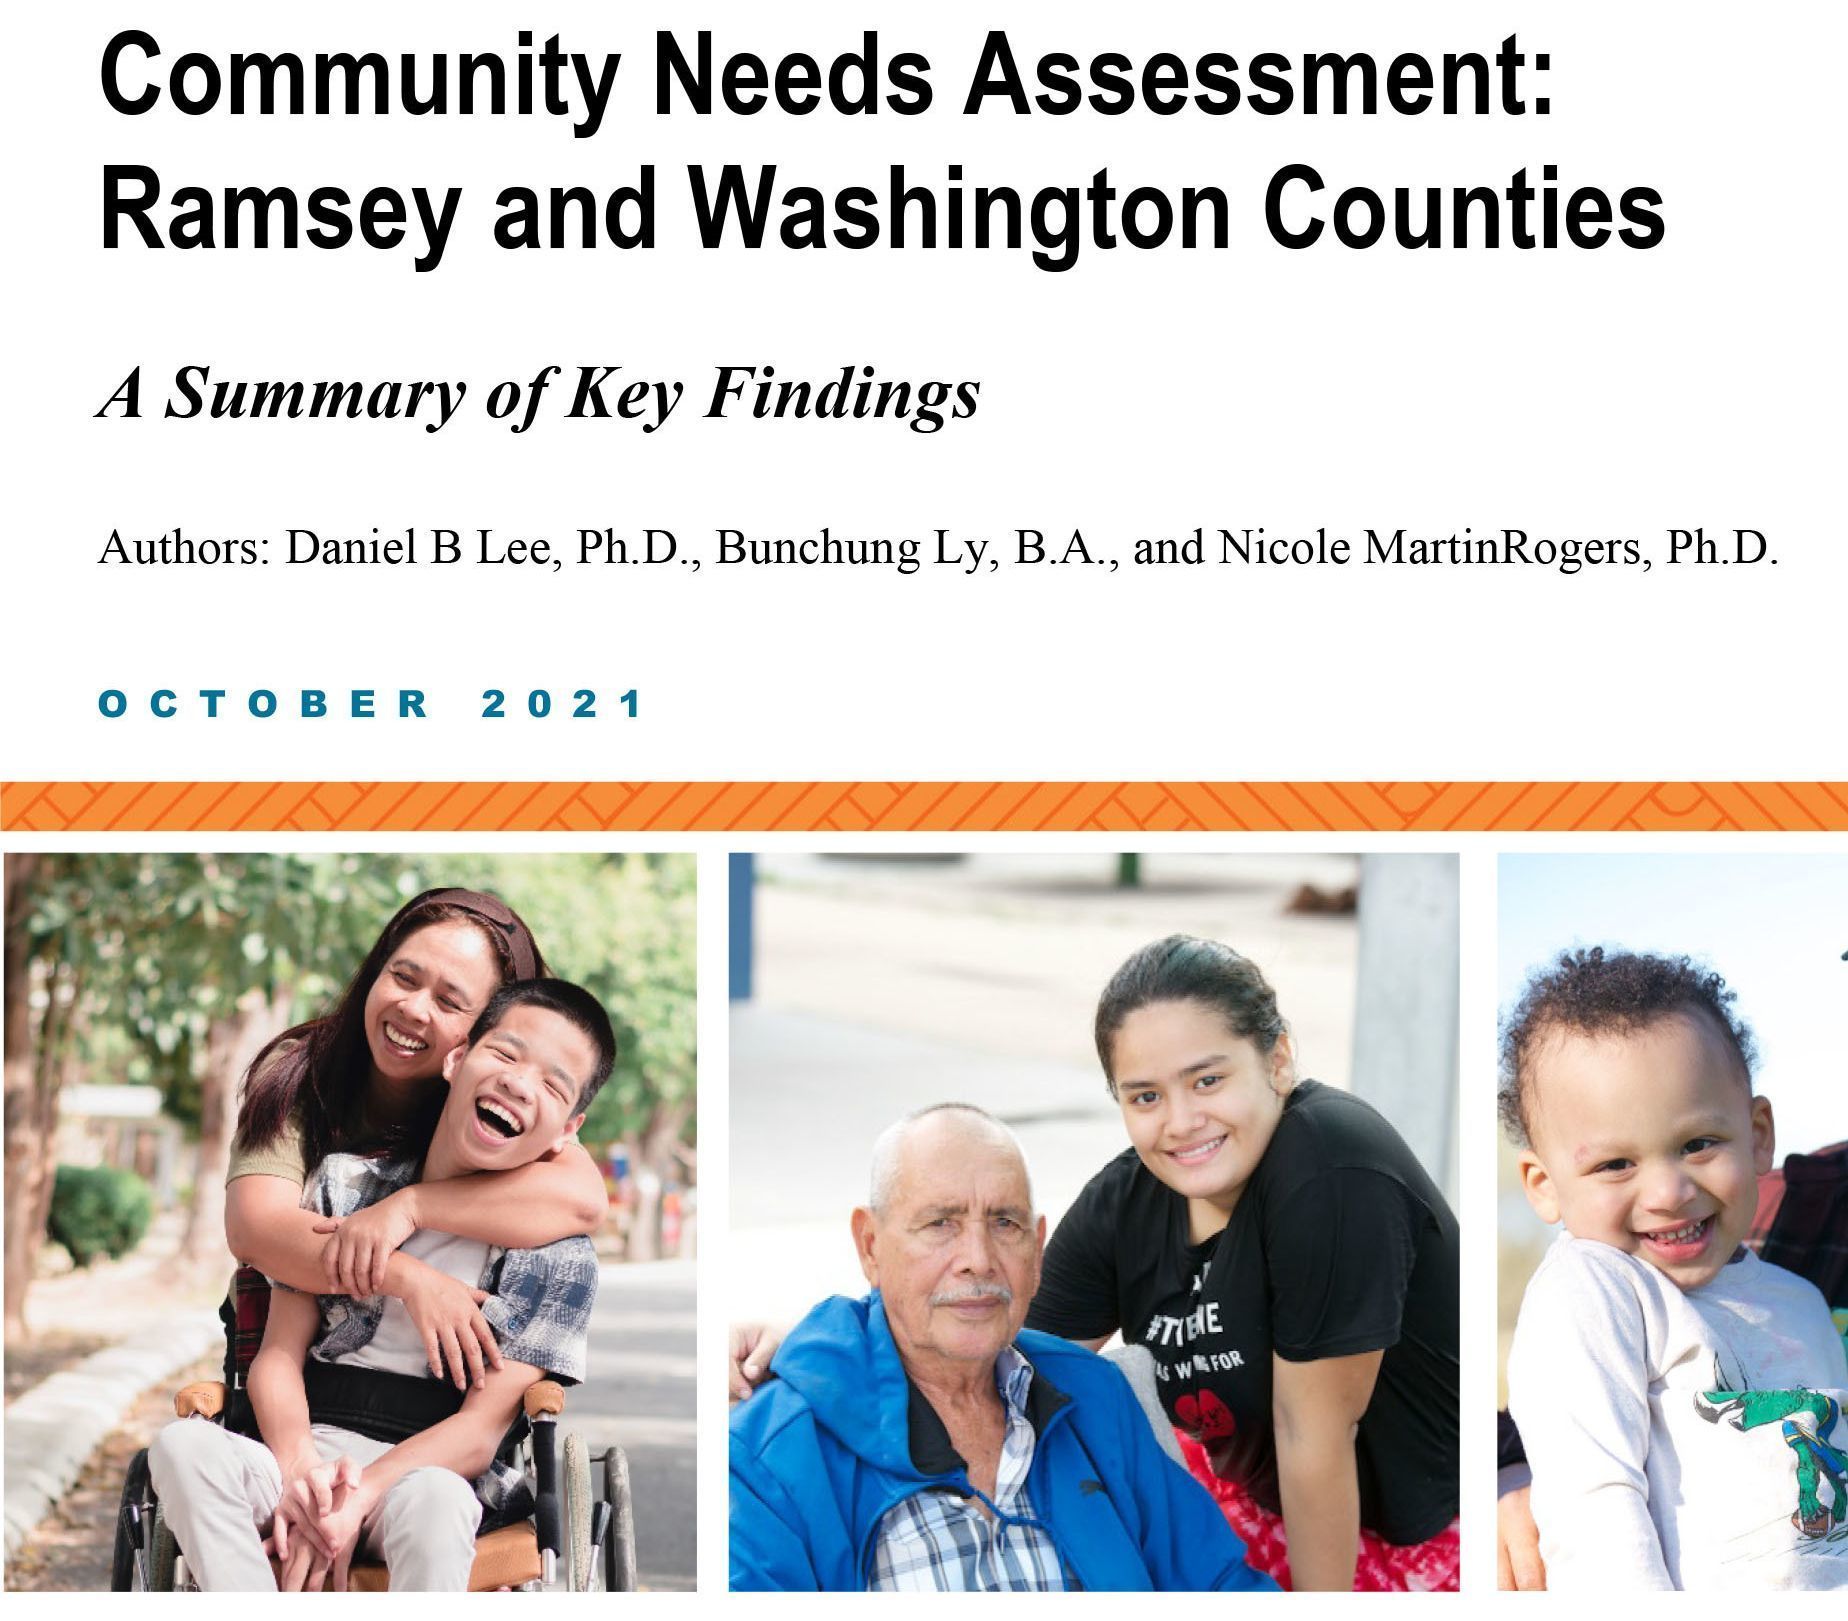 2021 Community Needs Assessment